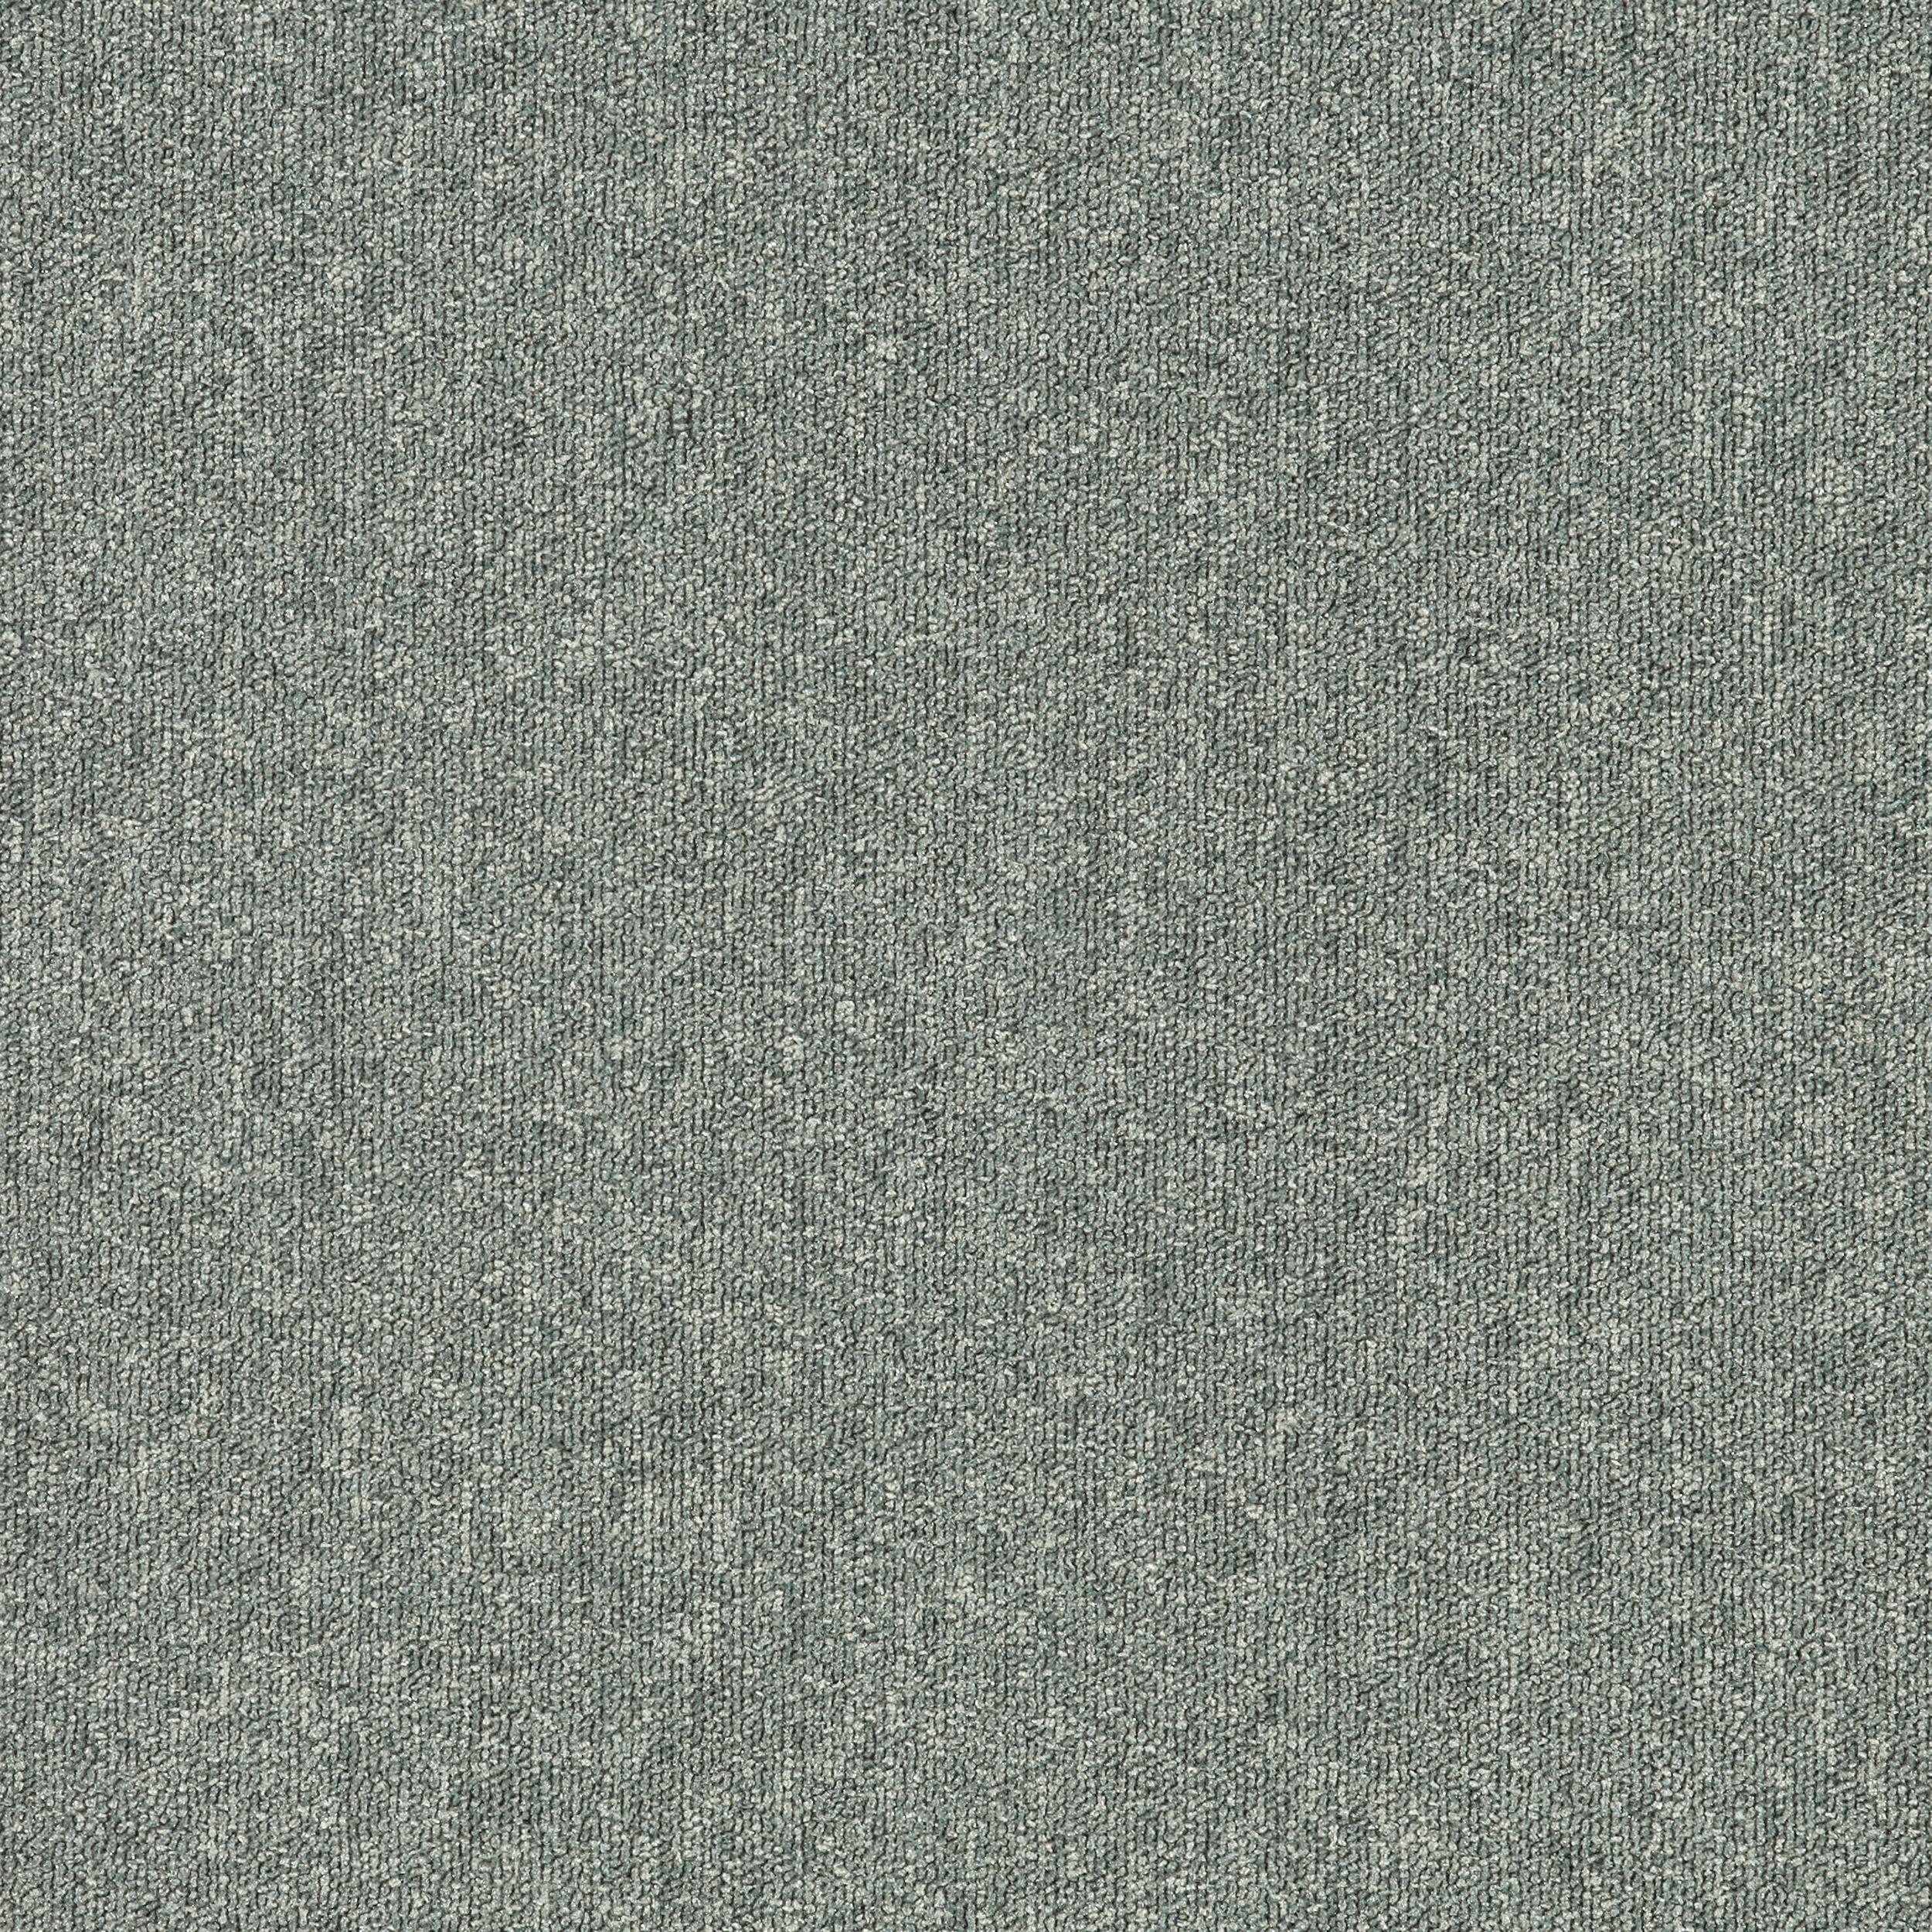 Heuga 580 II carpet tile in Oyster afbeeldingnummer 2